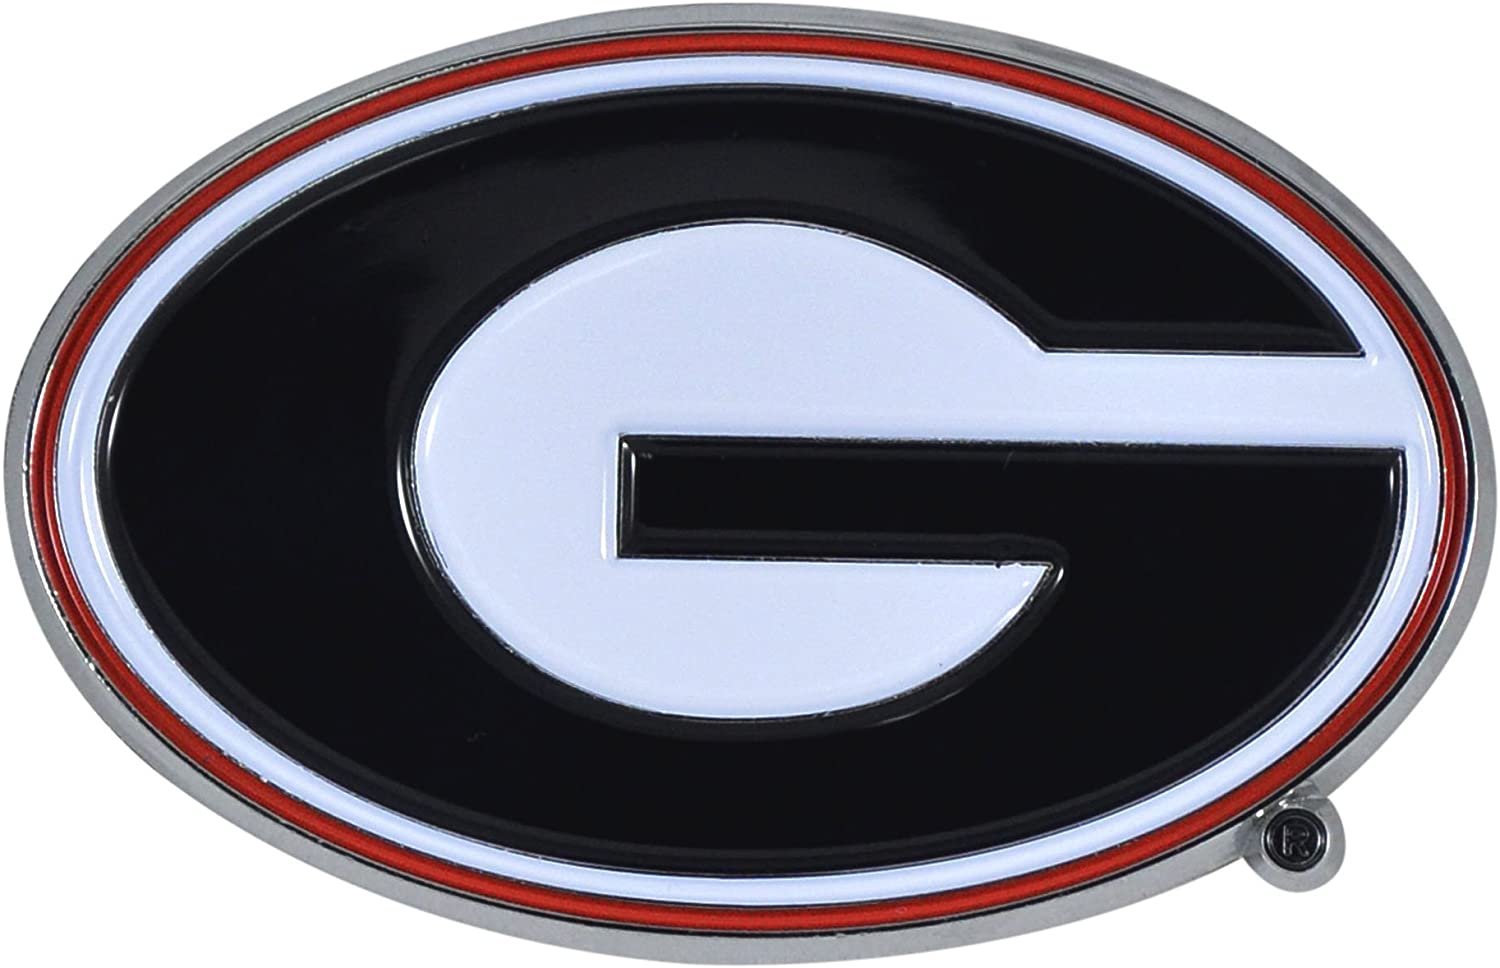 University of Georgia Bulldogs Premium Solid Metal Raised Auto Emblem, Team Color, Shape Cut, Adhesive Backing